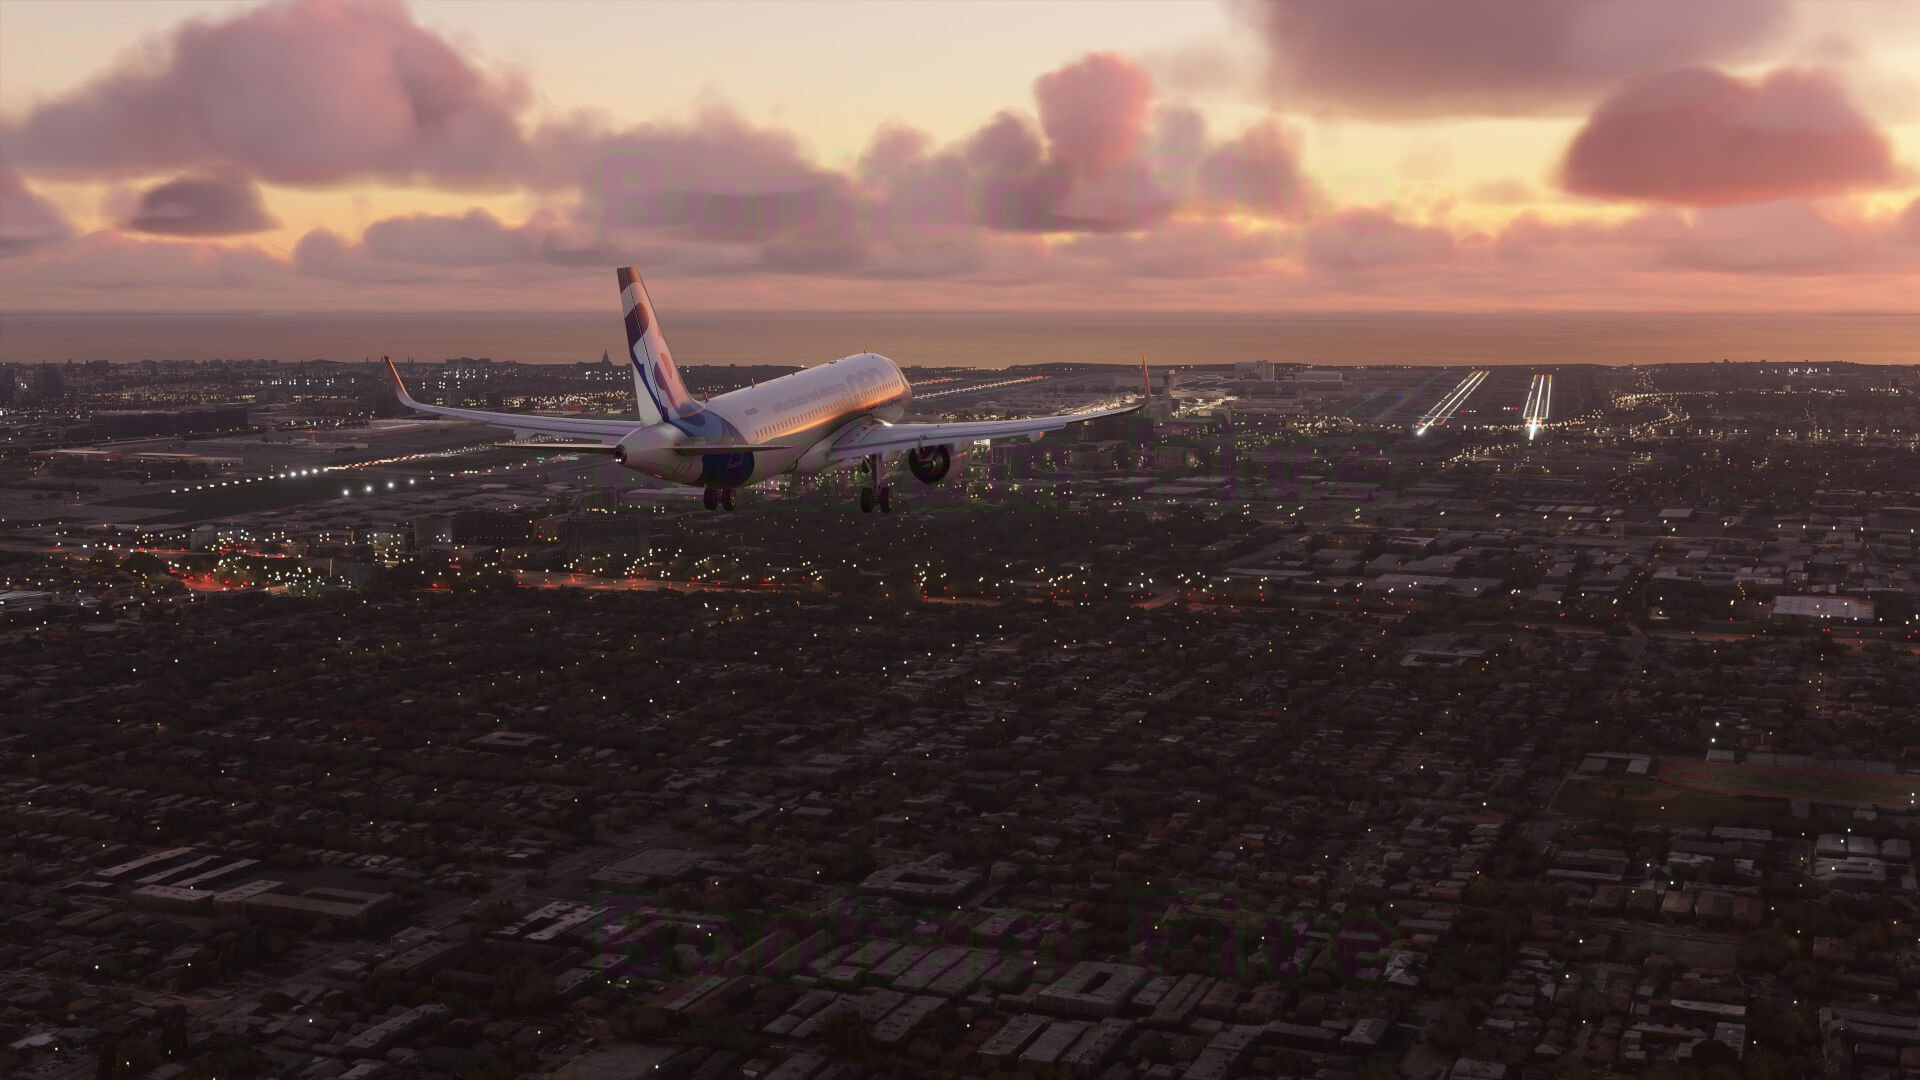 Great photo of the new Microsoft Flight Simulator